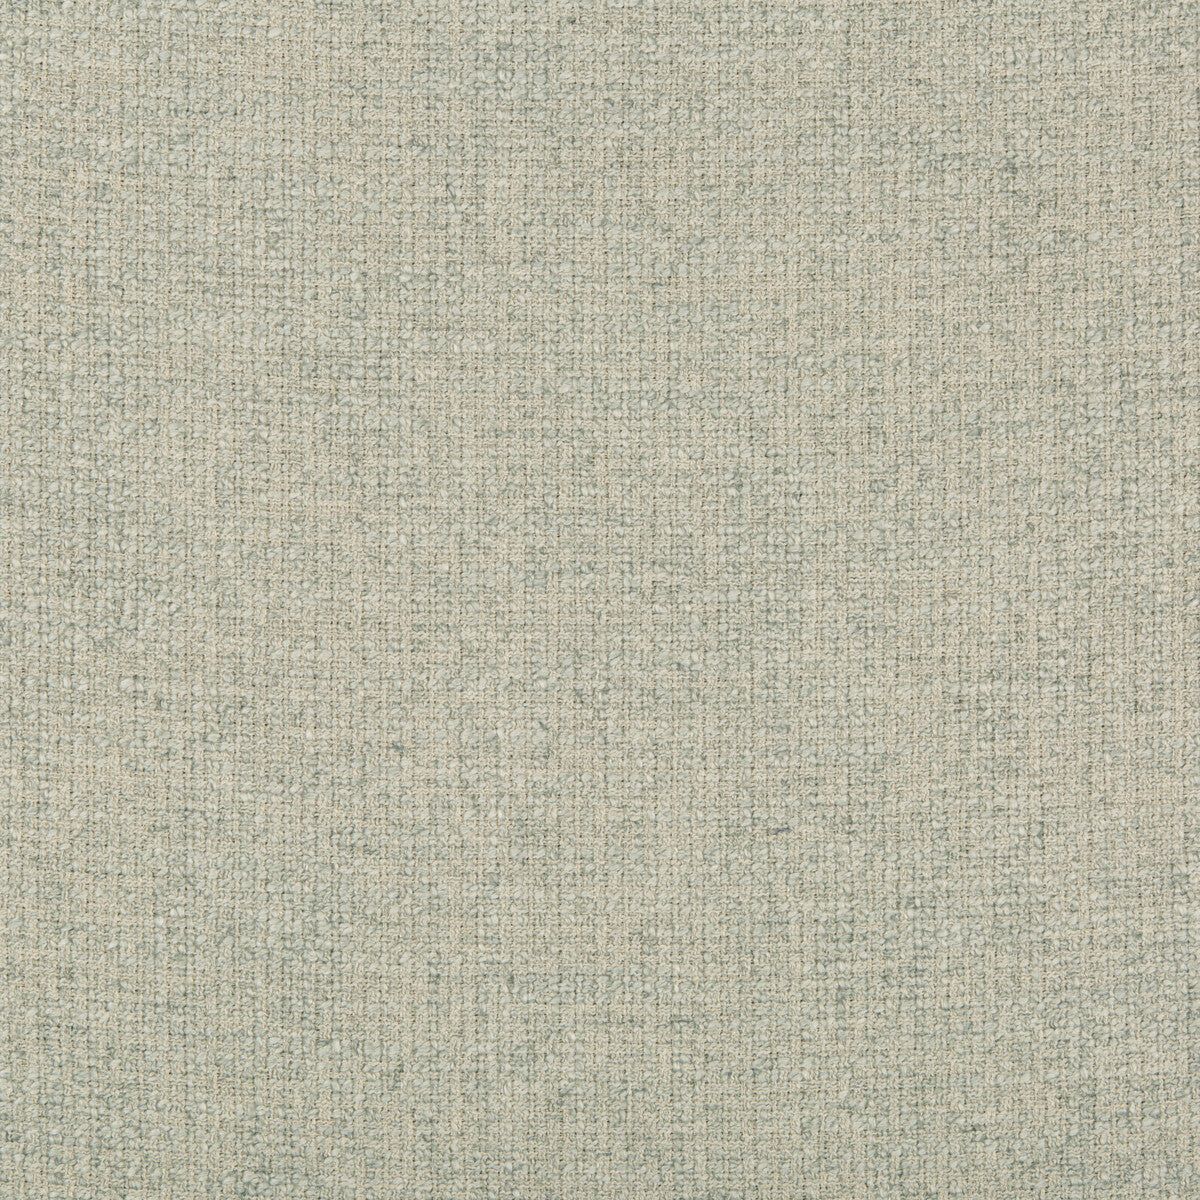 Kravet Smart fabric in 35329-15 color - pattern 35329.15.0 - by Kravet Smart in the Performance Kravetarmor collection